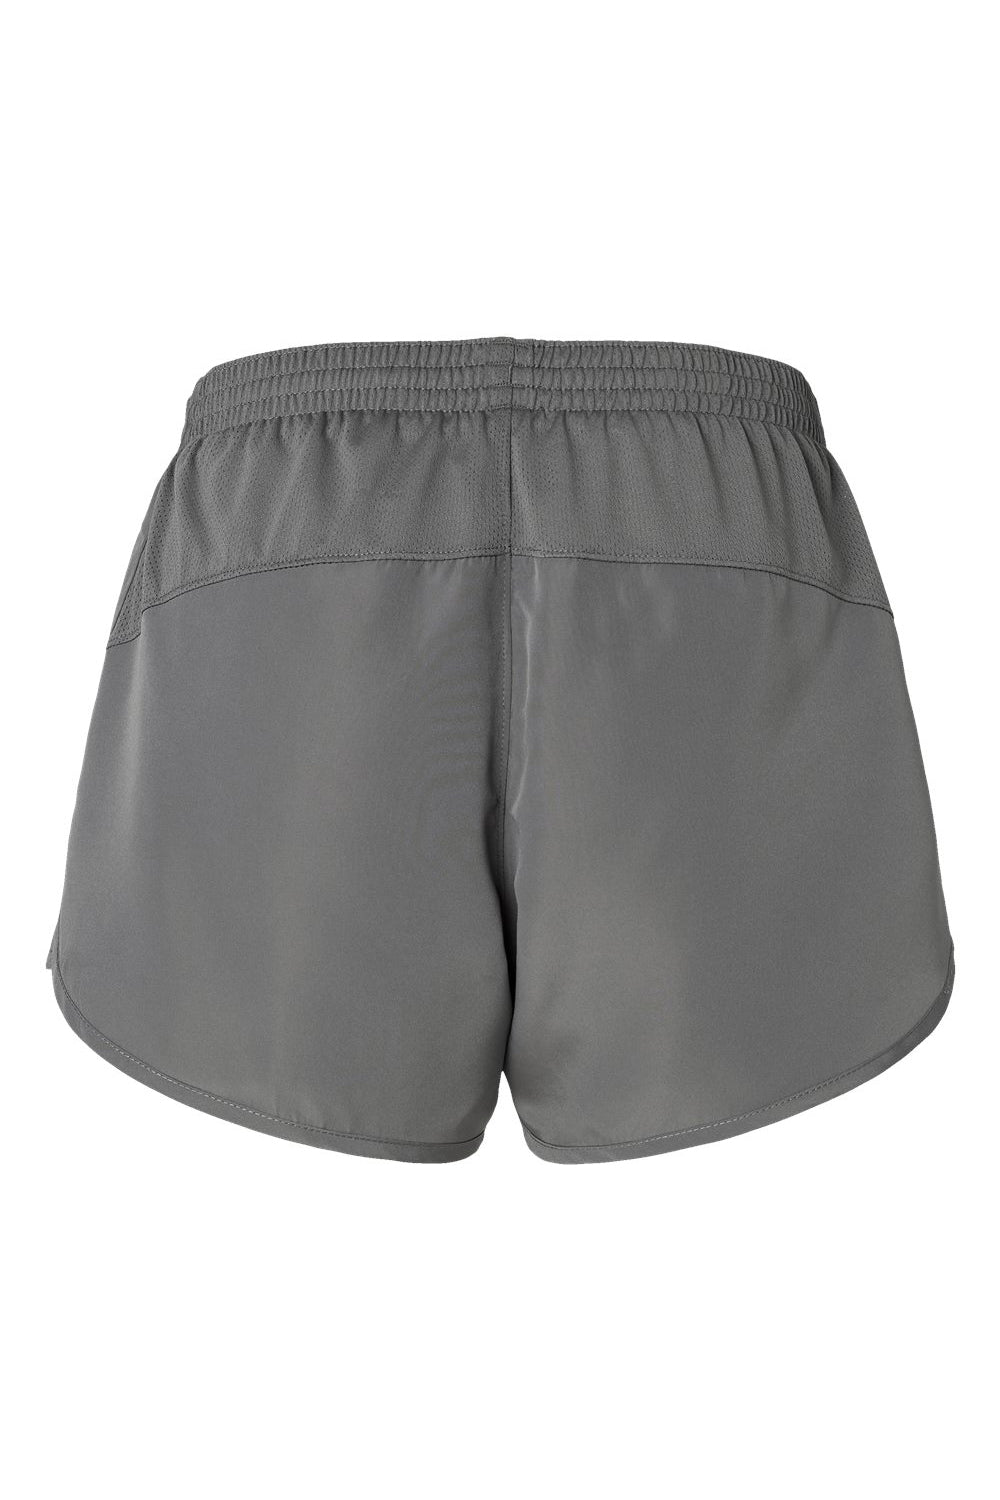 Augusta Sportswear 2430 Womens Wayfarer Moisture Wicking Shorts w/ Internal Pocket Graphite Grey Flat Back